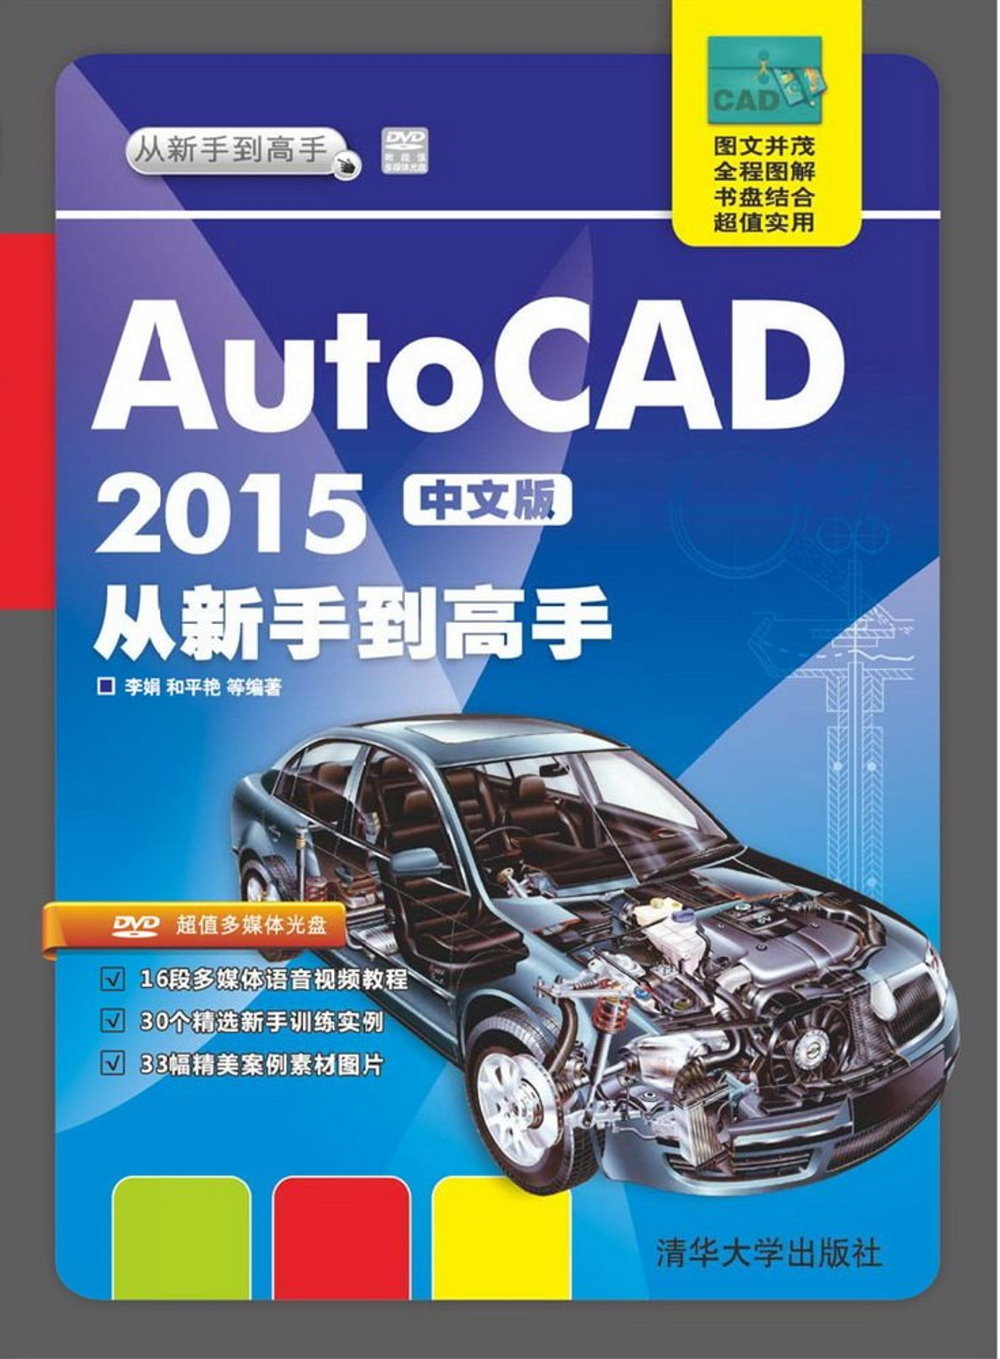 AutoCAD 2015中文版從新手到高手